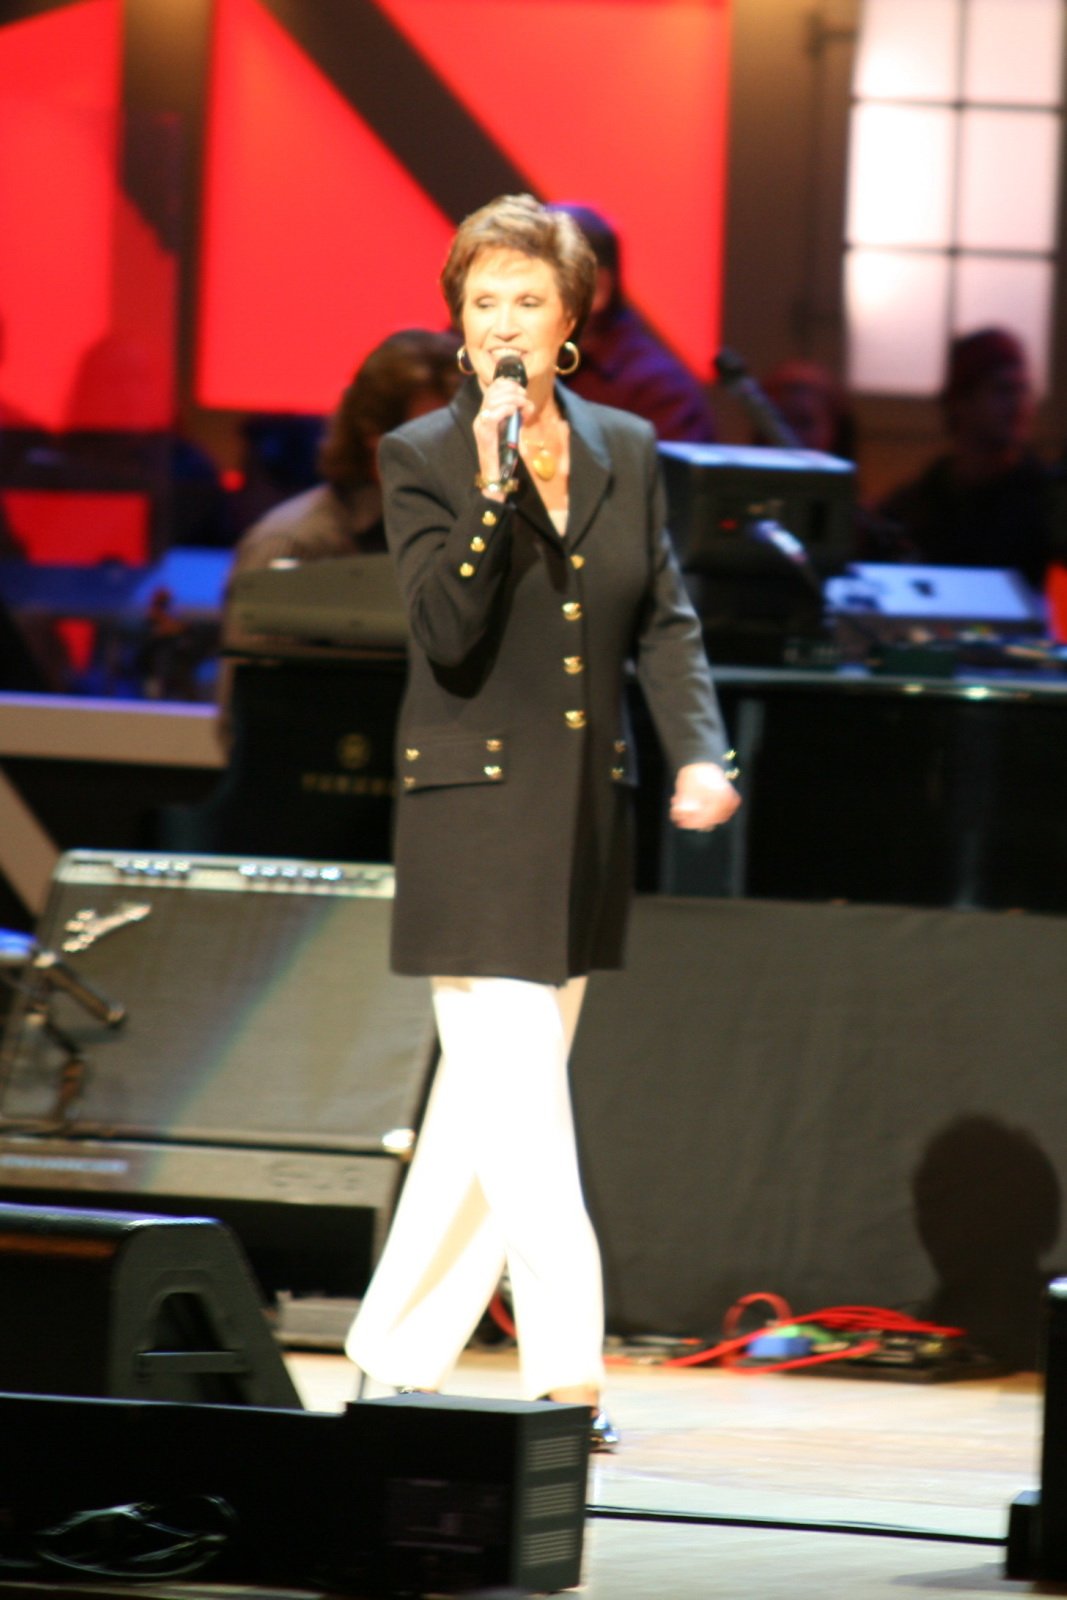 Jan Howard at Grand Ole Opry on May 18, 2007 | Photo: Wikimedia/Albert Herring